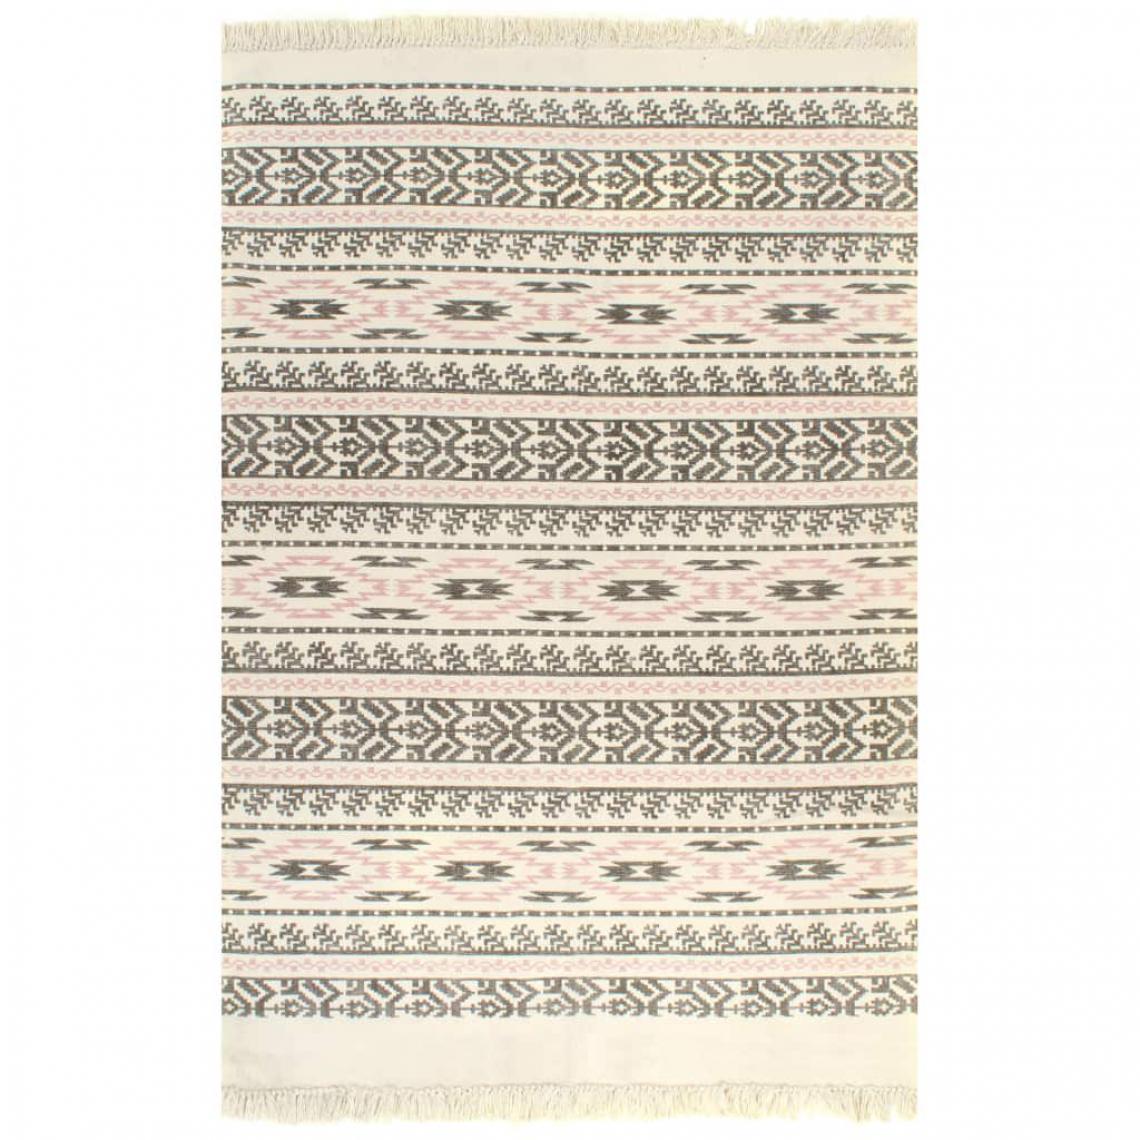 Icaverne - Chic Décorations serie Bandar Seri Begawan Tapis Kilim Coton 160 x 230 cm avec motif Gris/rose - Tapis